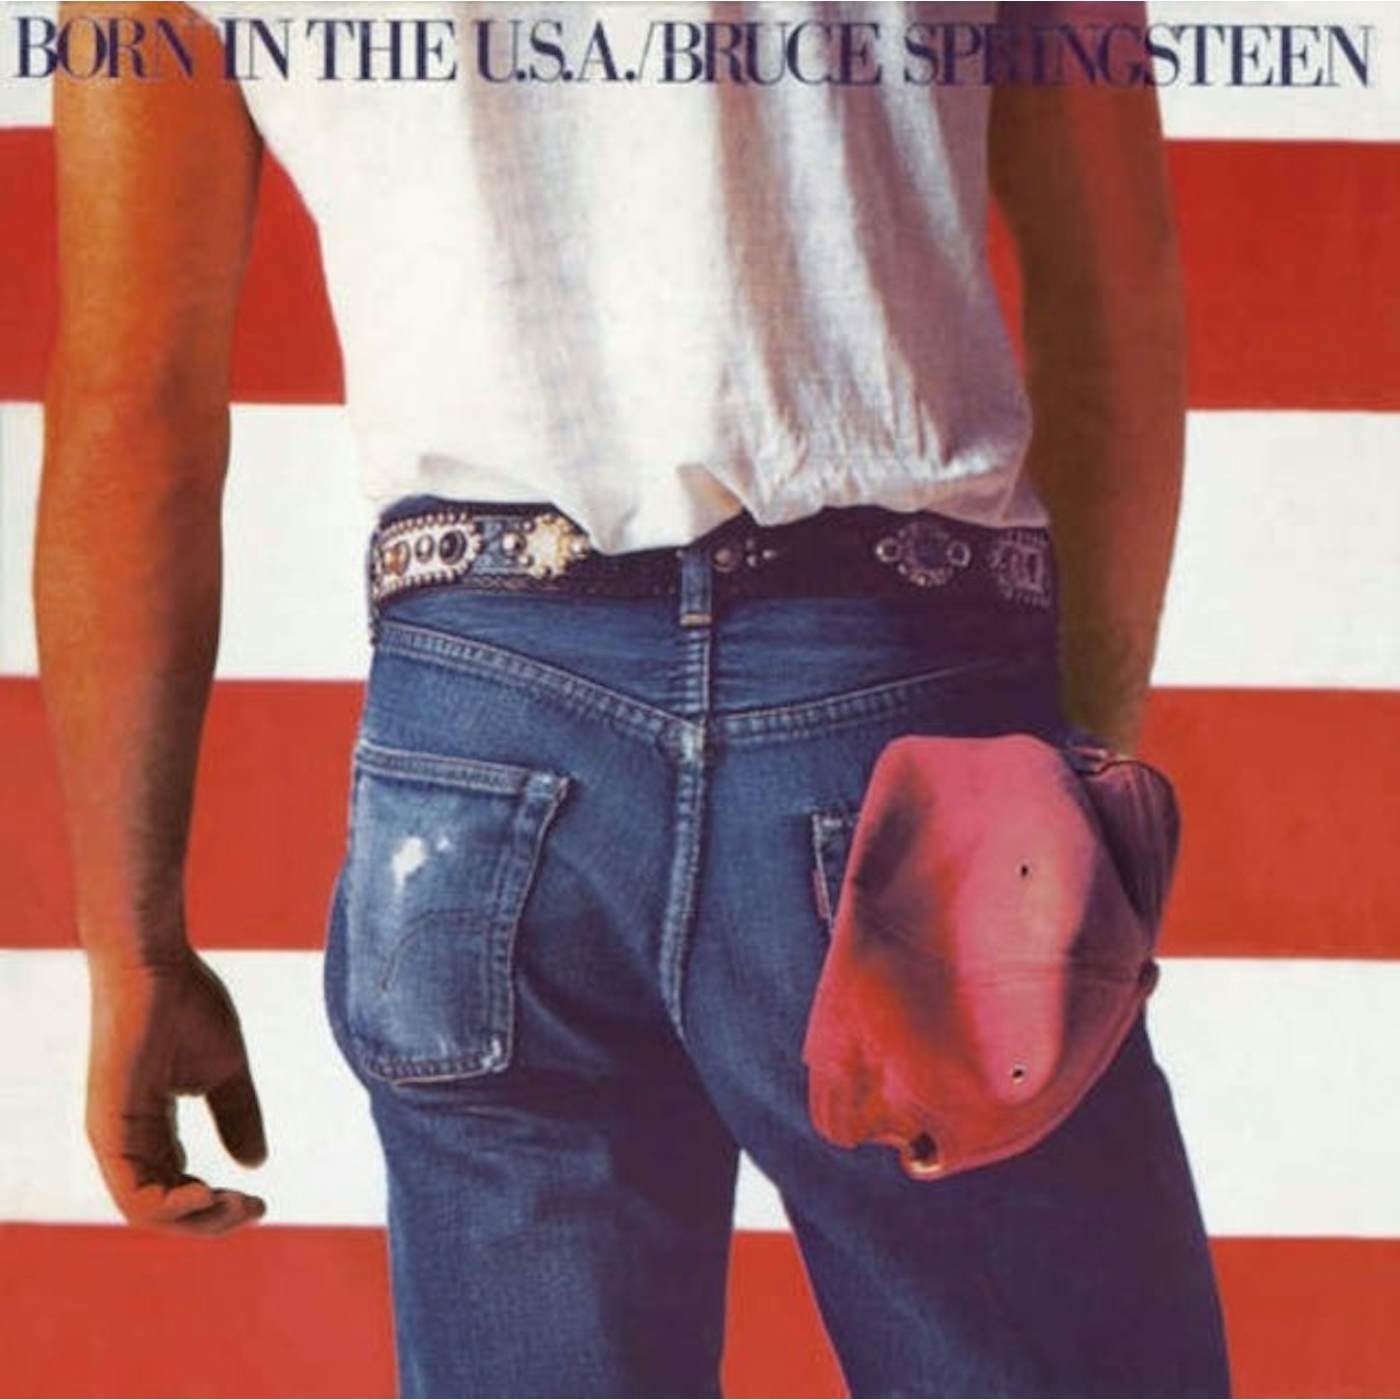 Bruce Springsteen LP Vinyl Record - Born In The USA